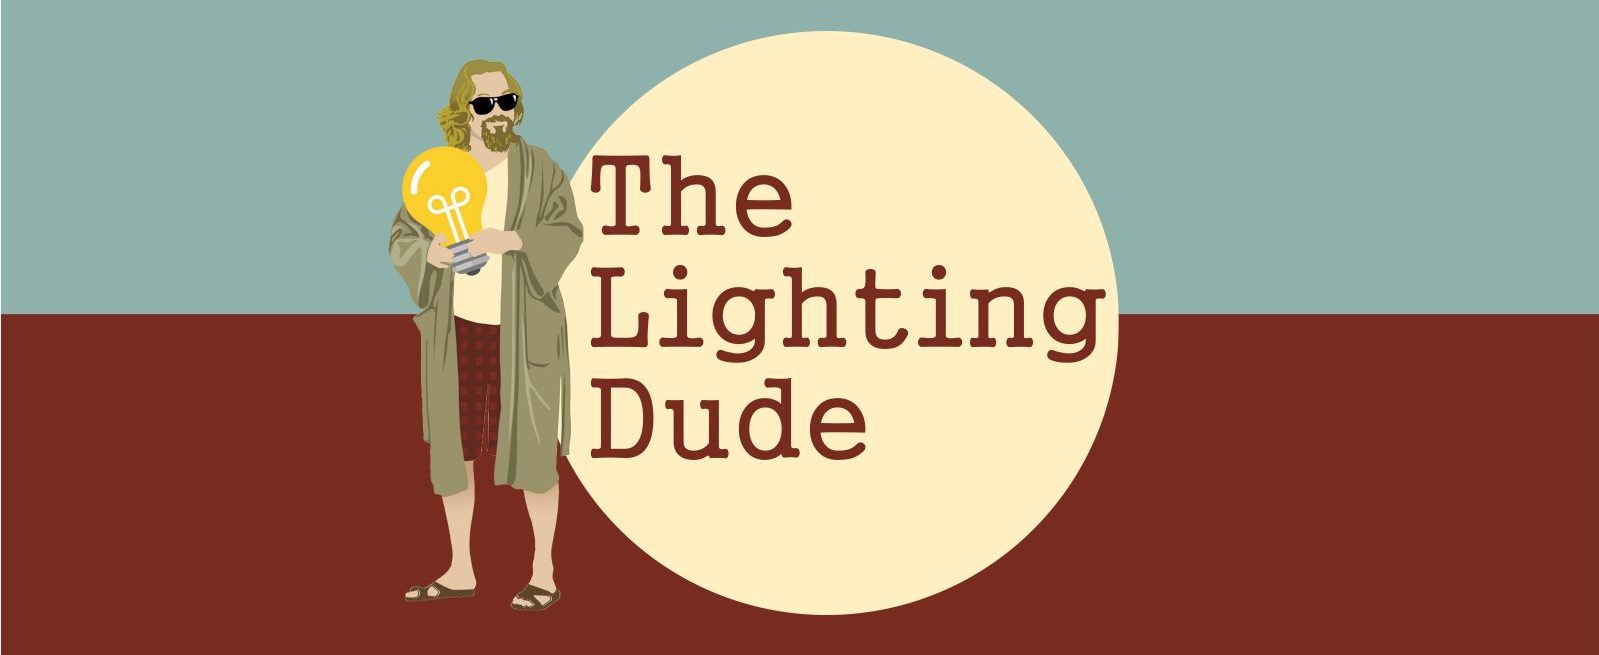 The Lighting dude